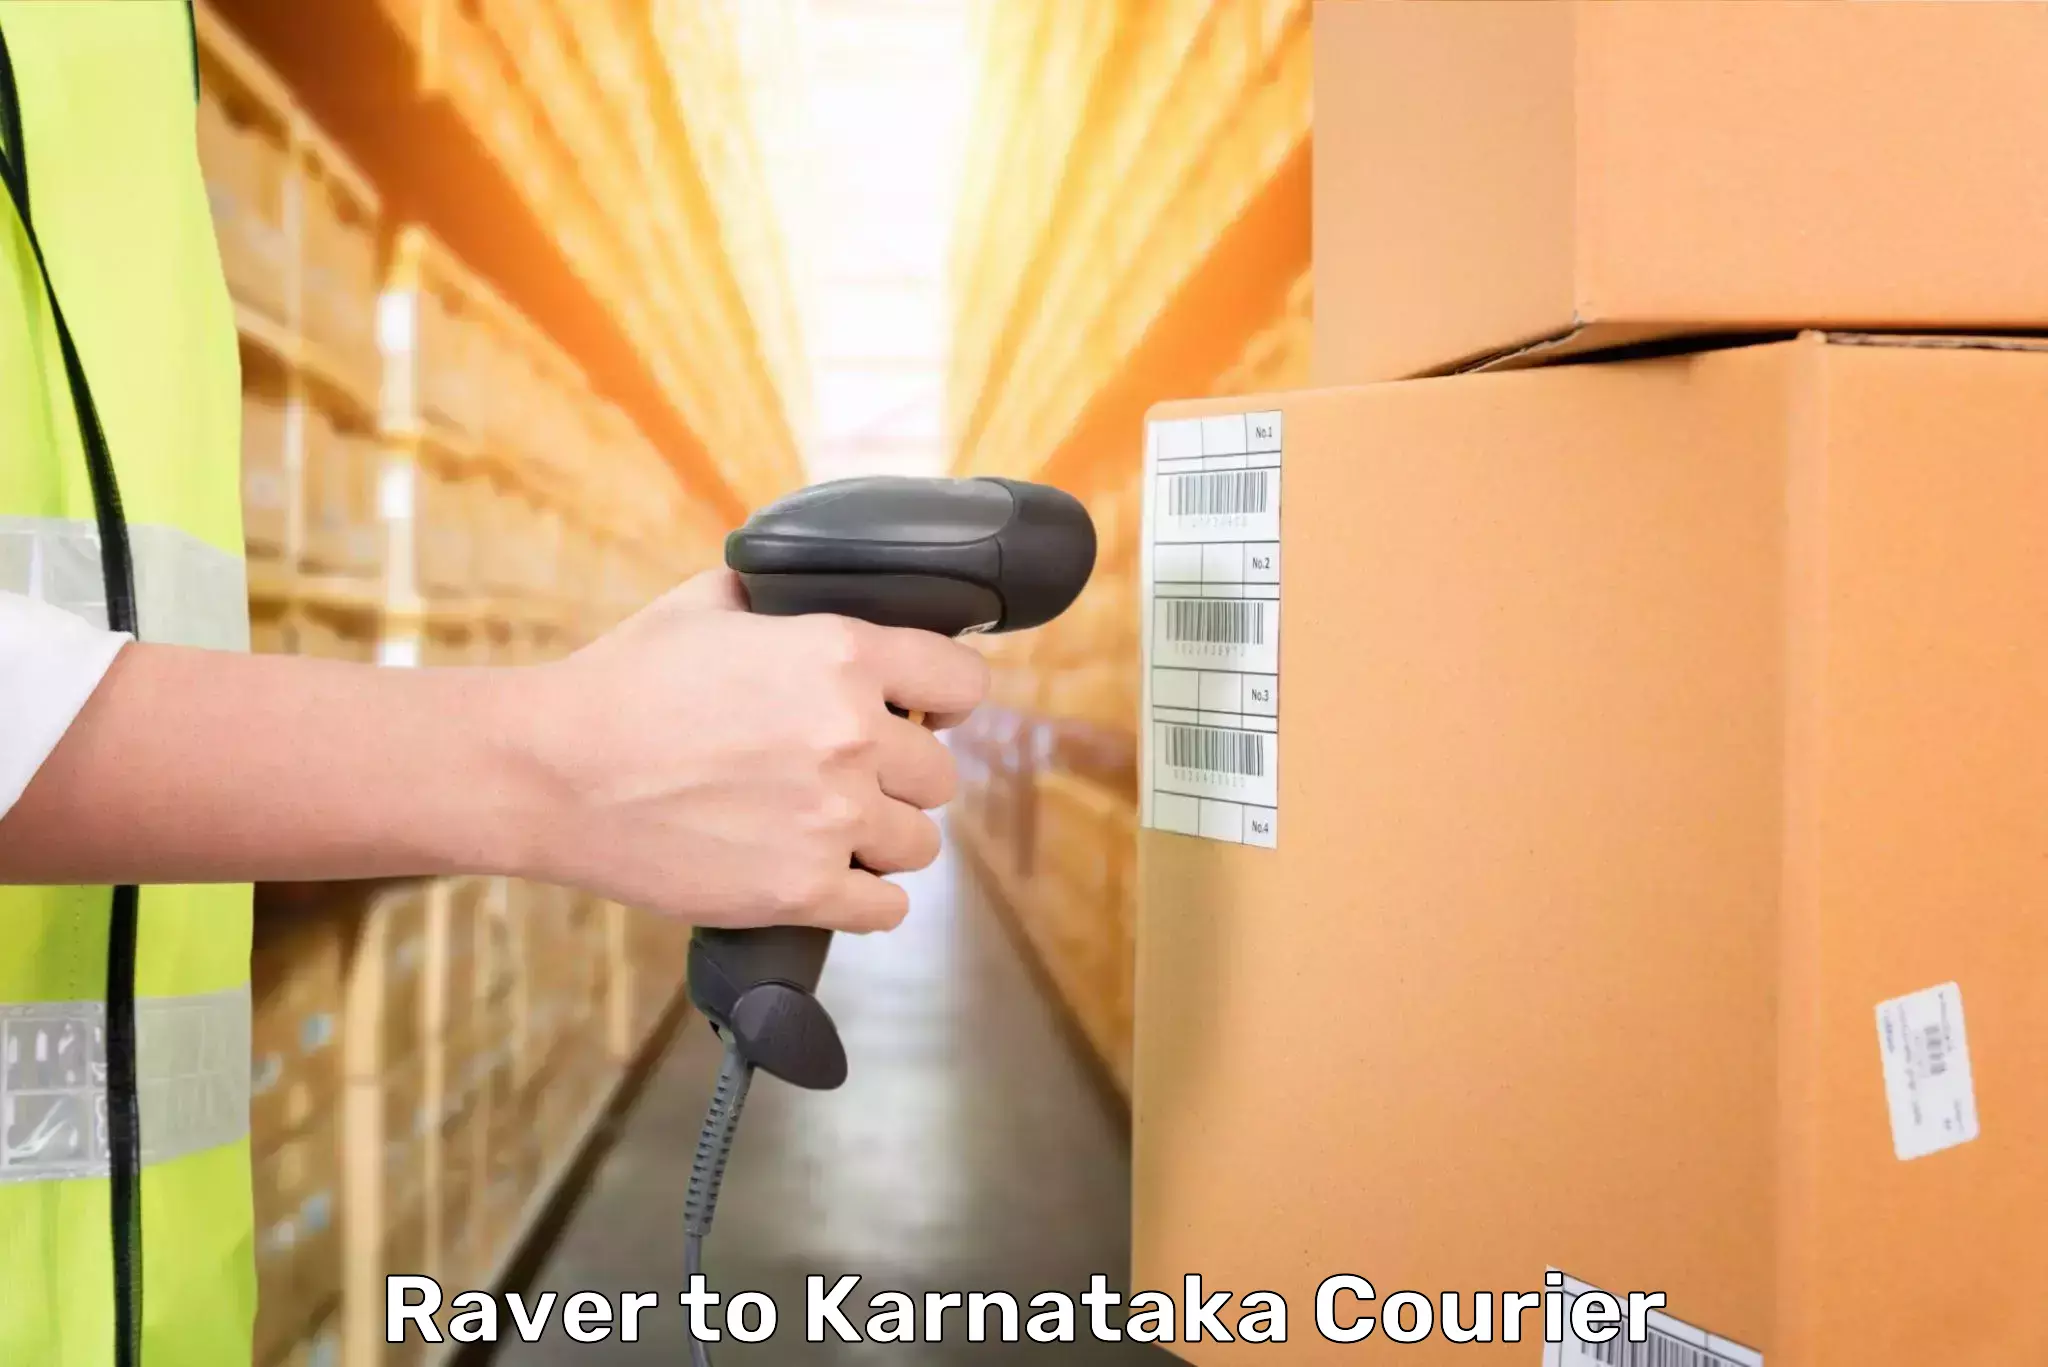 Luggage shipment specialists Raver to Karnataka